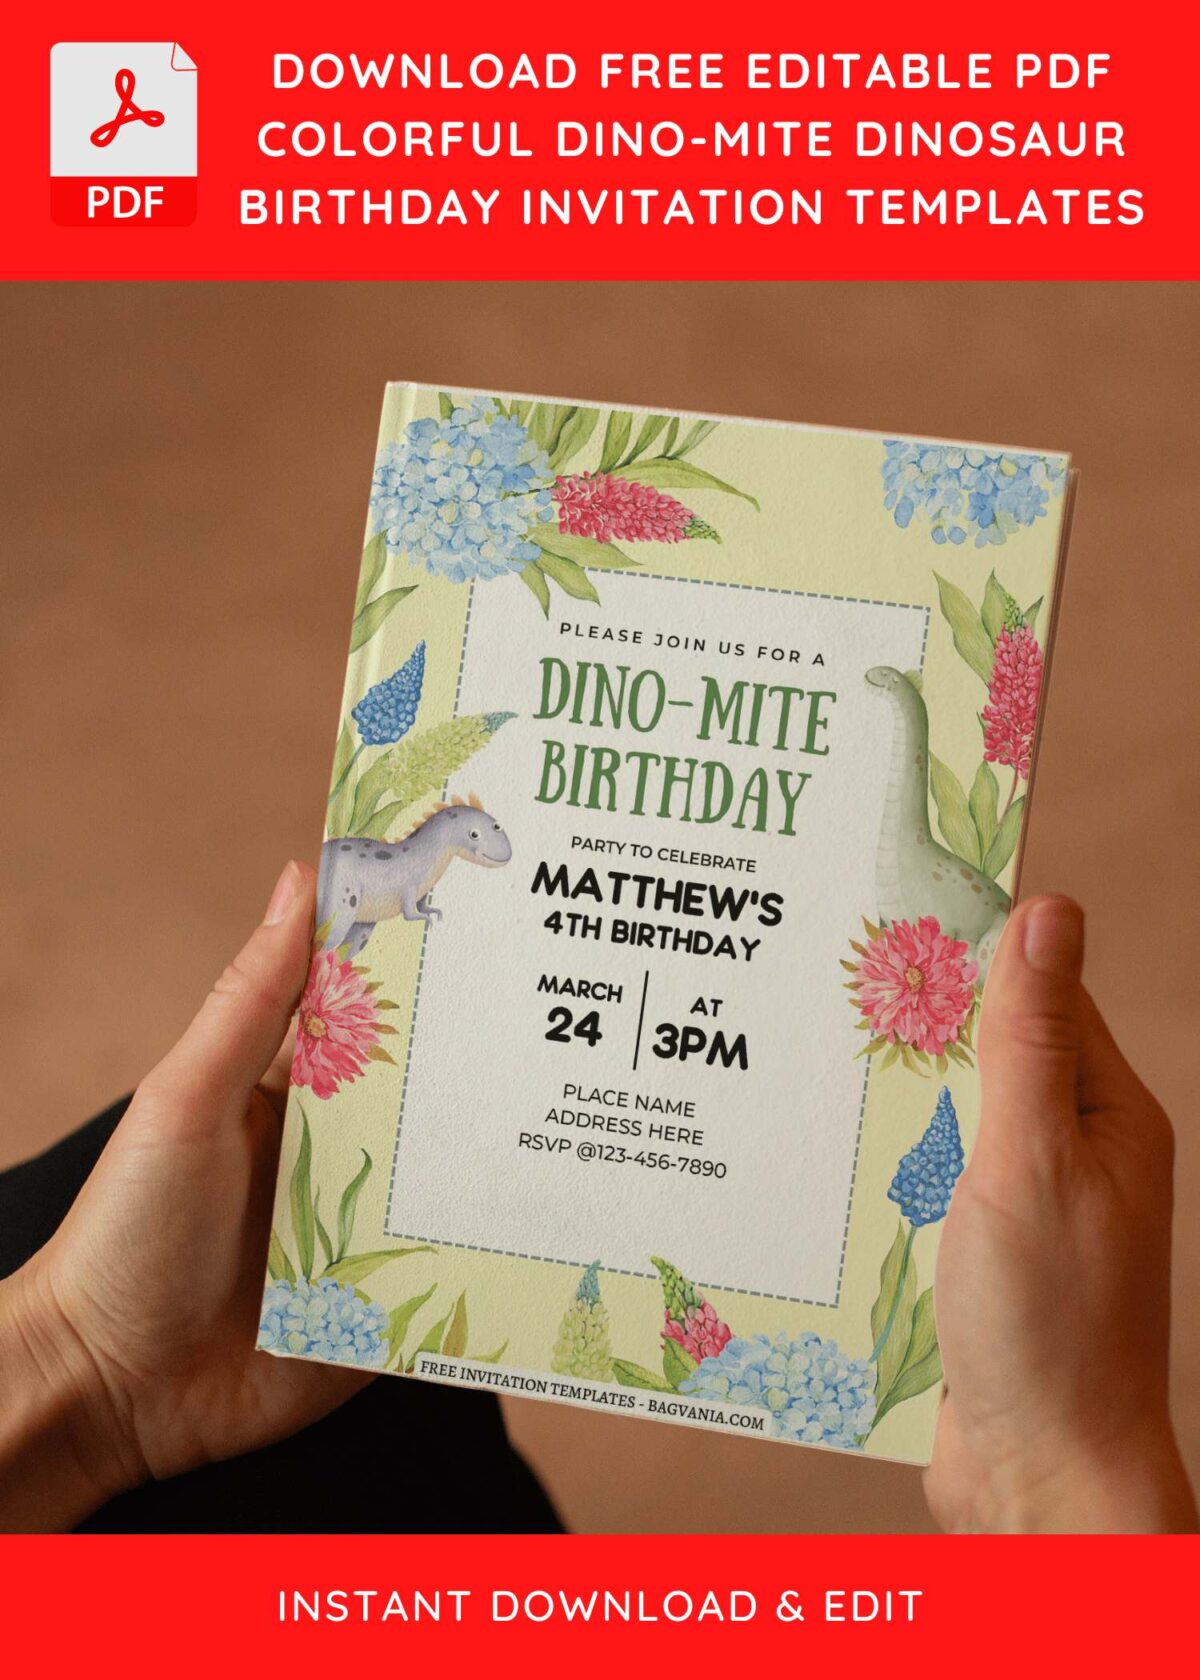 (Free Editable PDF) Bright Colorful Dinosaur Birthday Invitation Templates E